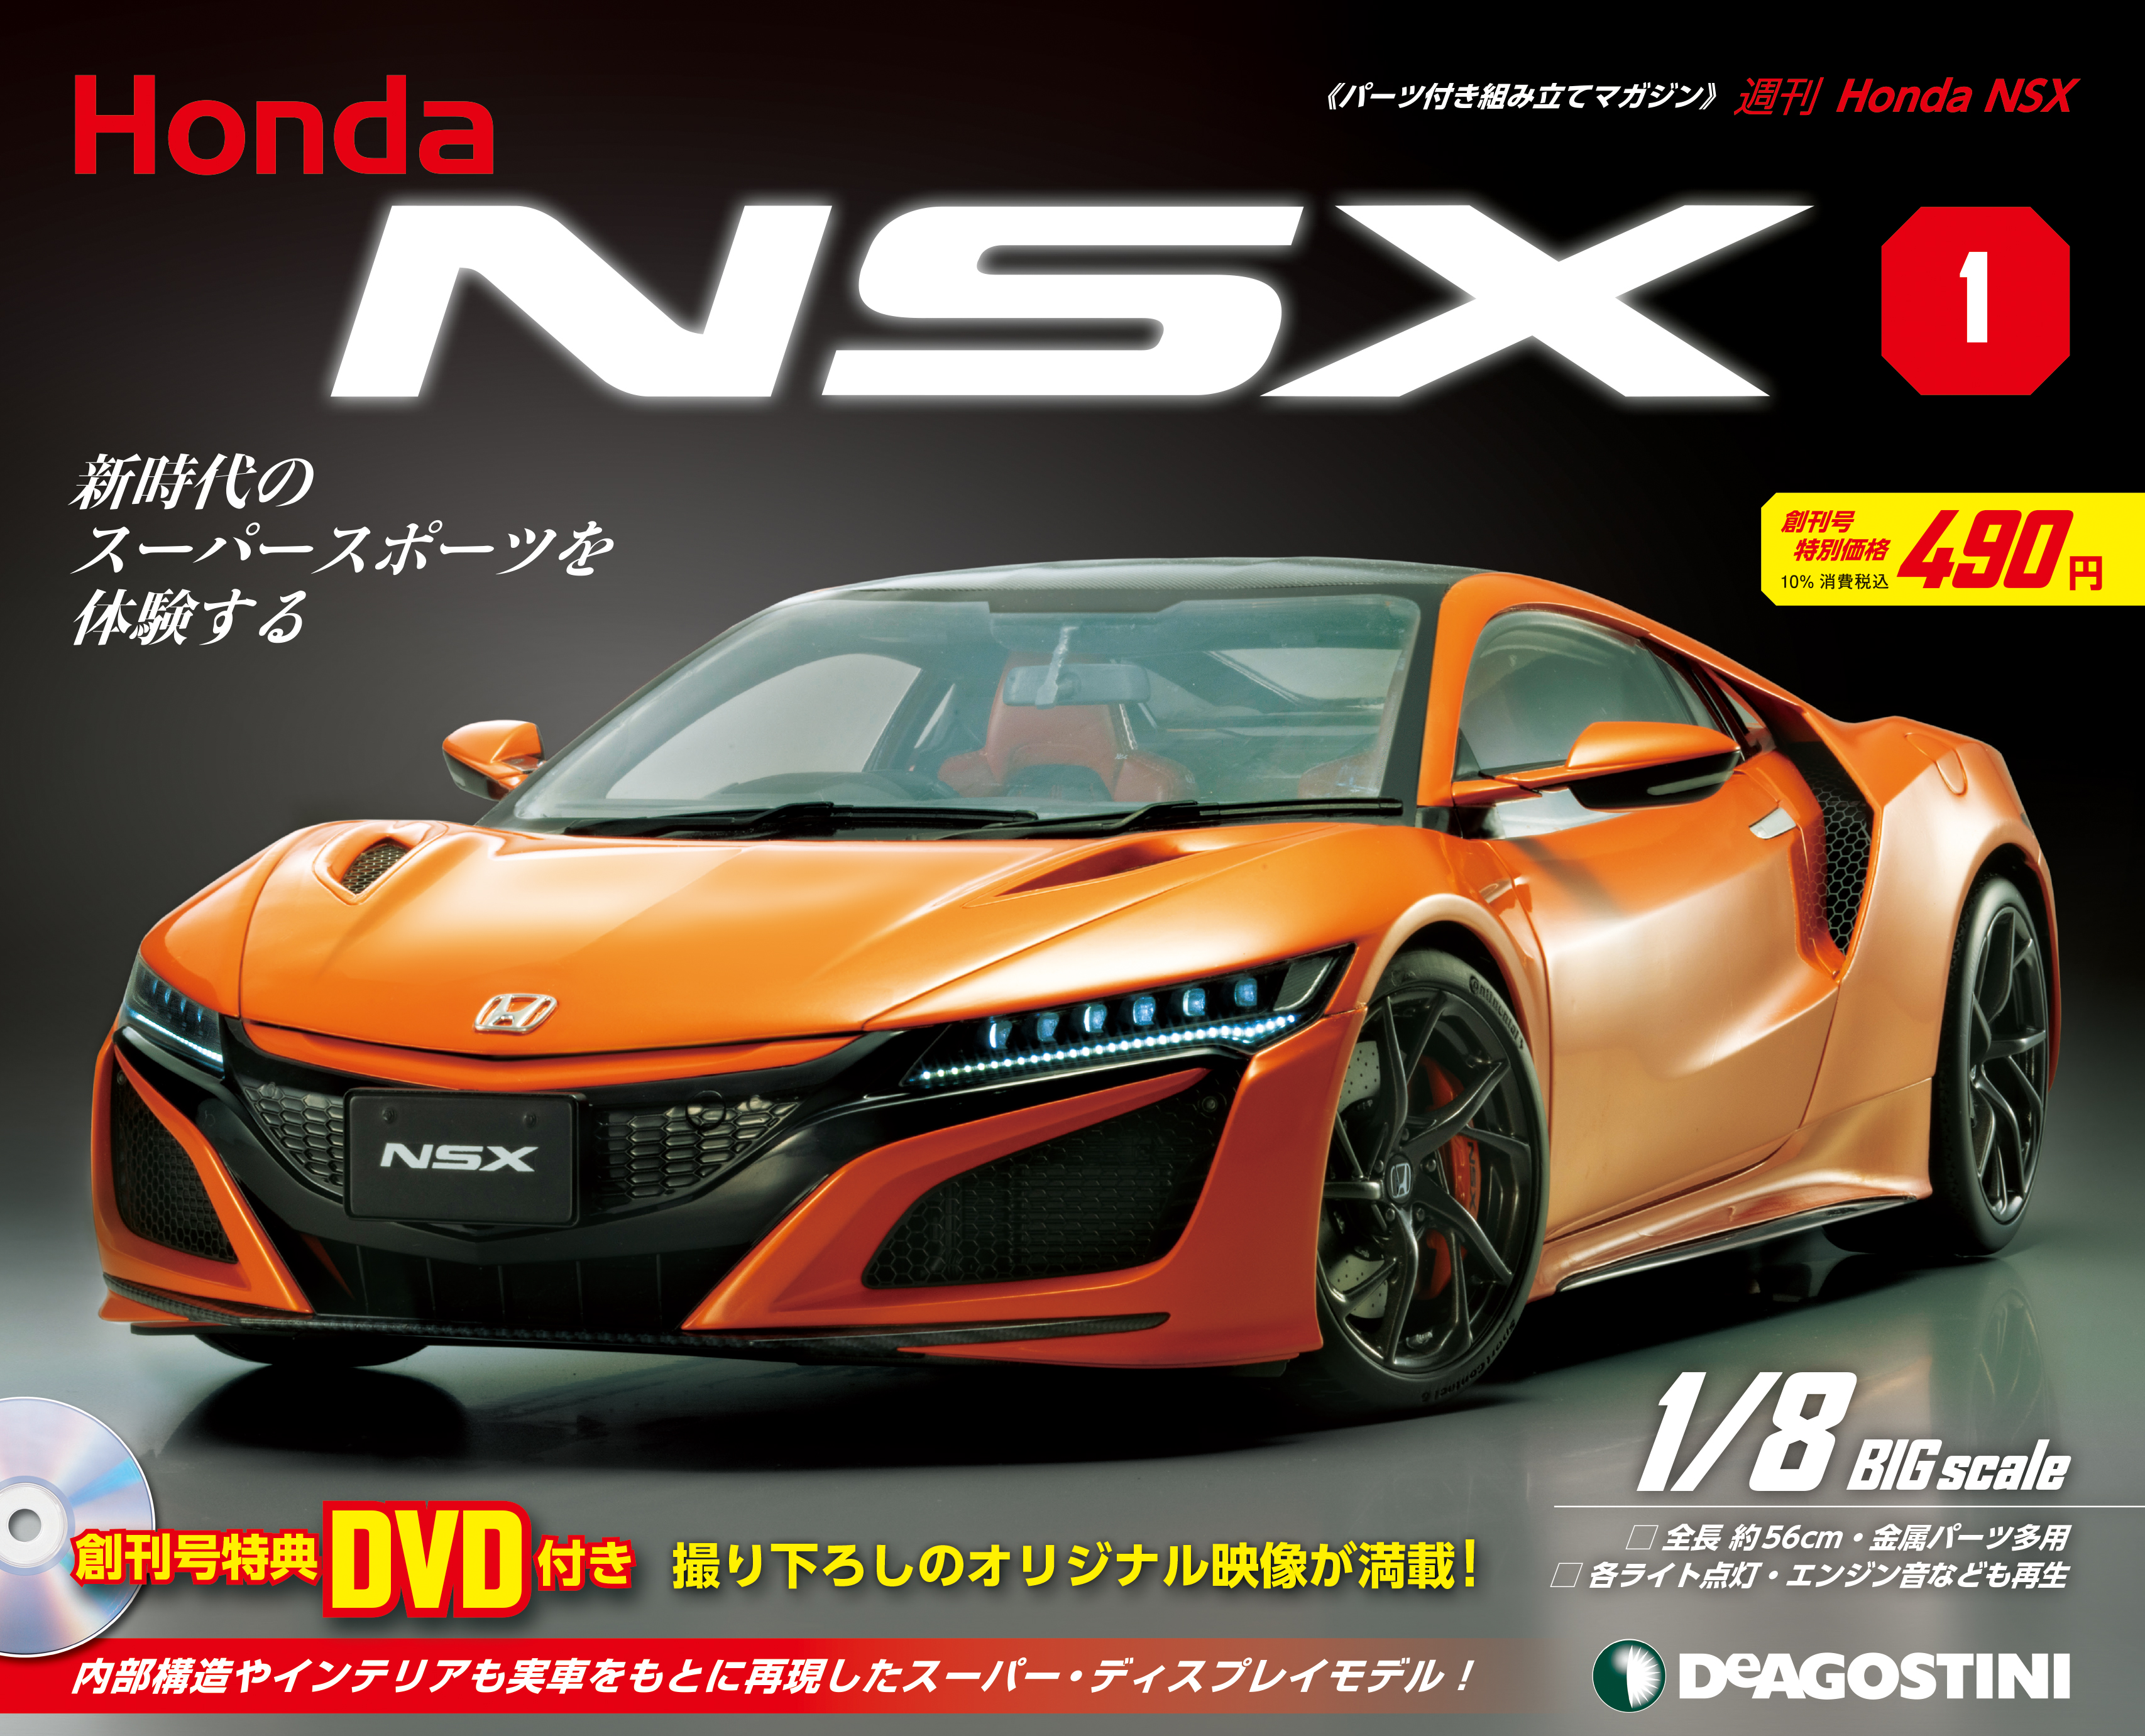 Honda完全監修で実現 世界が認めるスーパーカーをビッグスケール ダイキャストで徹底再現 週刊 Honda Nsx 創刊 株式会社デアゴスティーニ ジャパンのプレスリリース